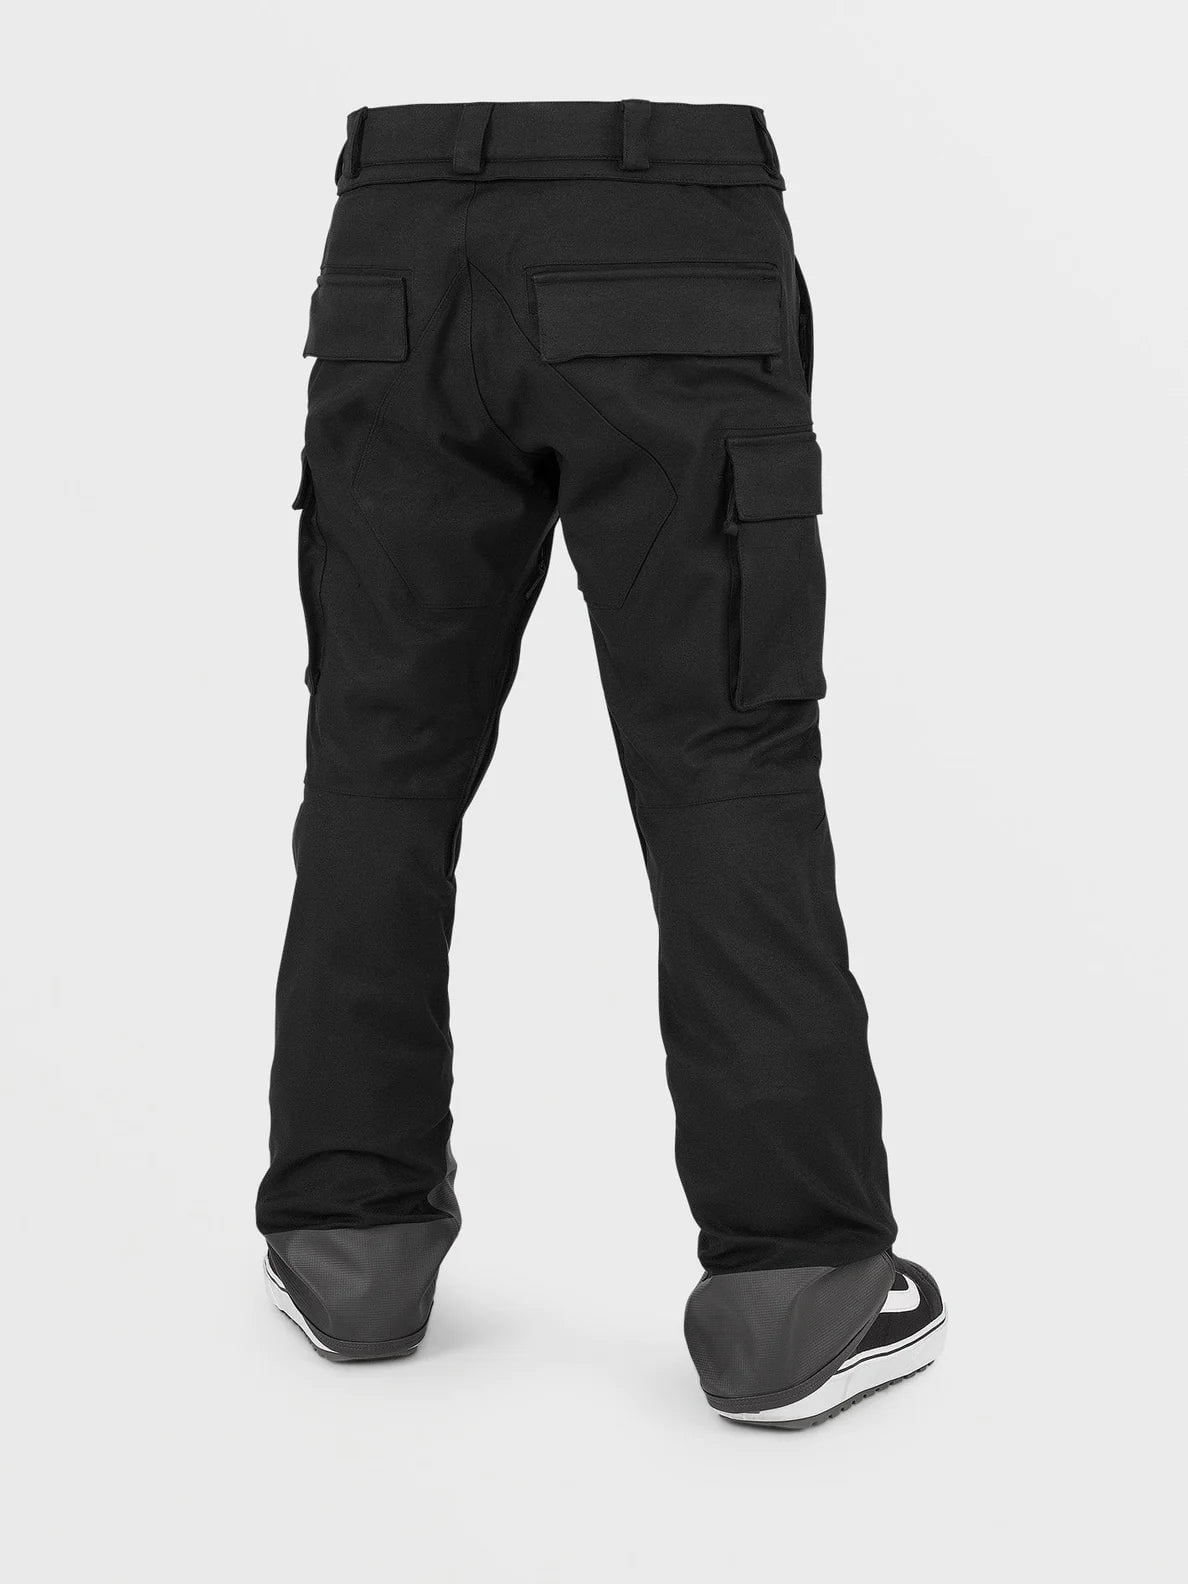 Volcom New Articulated Pant Snow Pants (Black) VOLCOM